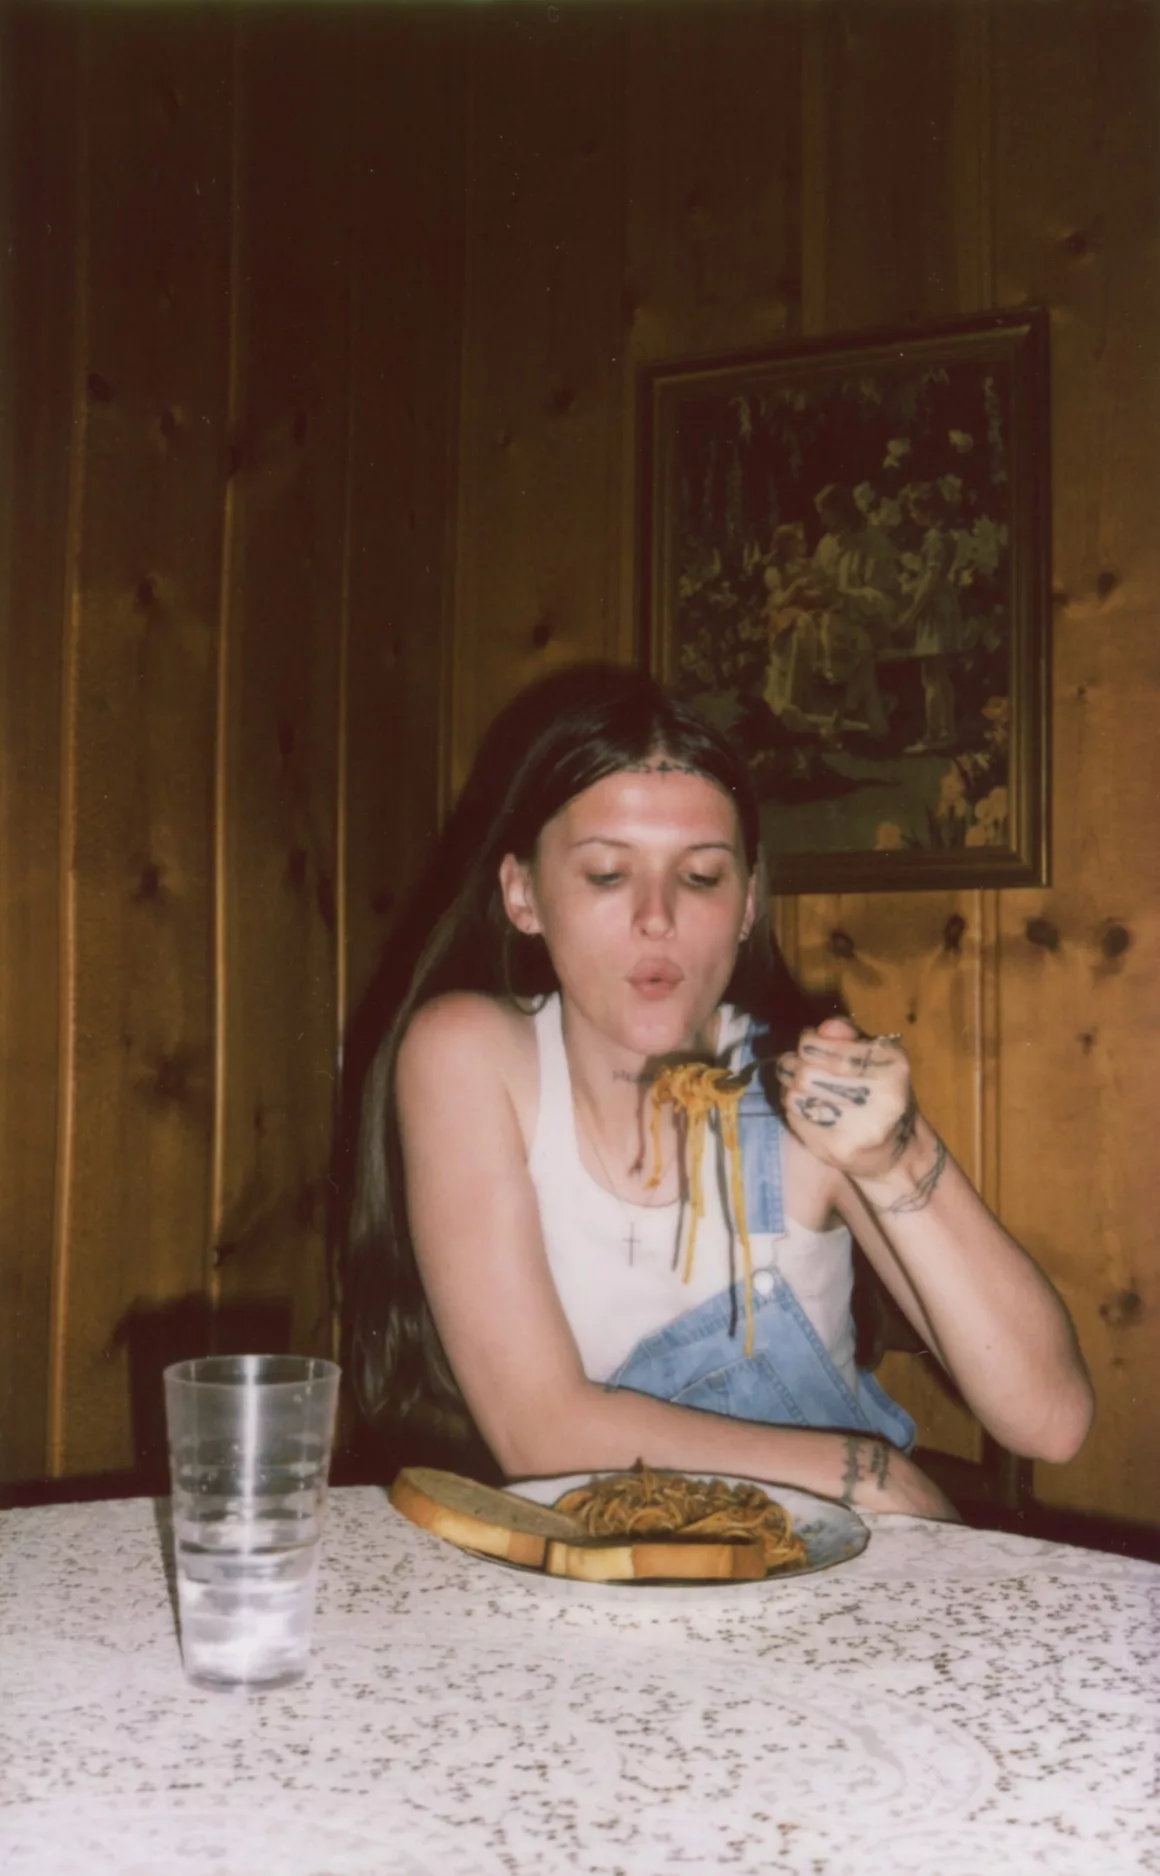 Ethel Cain eating pasta